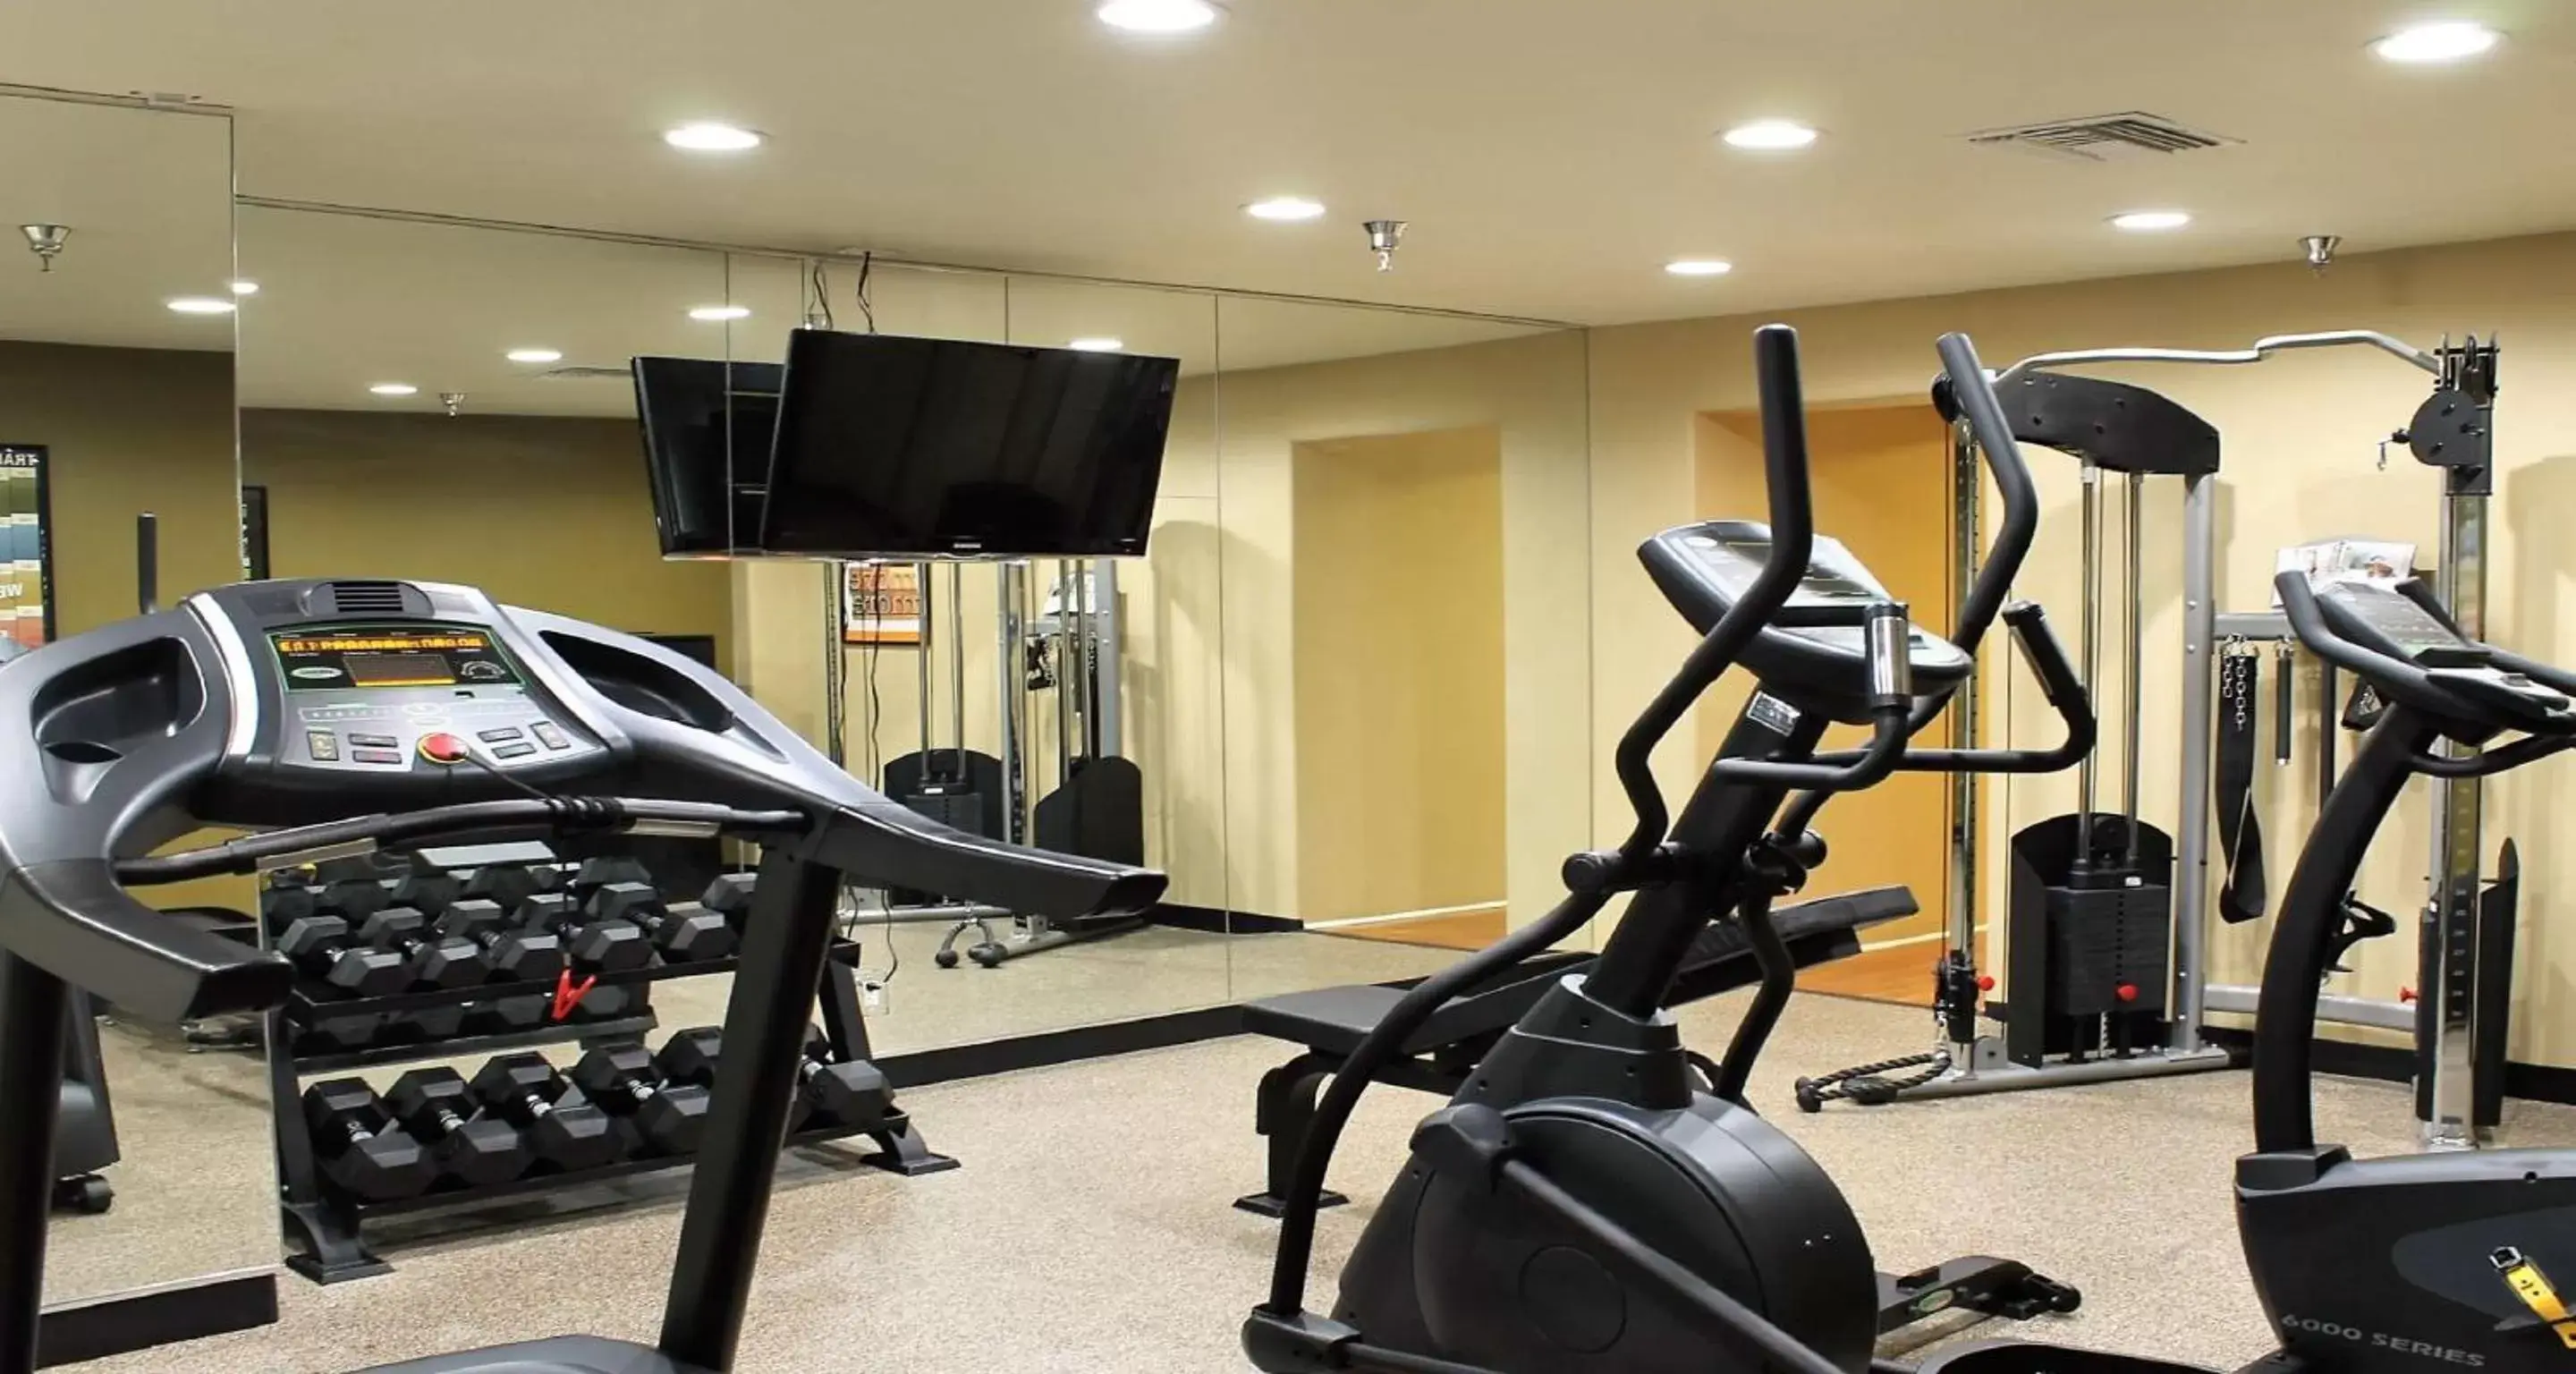 Fitness centre/facilities, Fitness Center/Facilities in Best Western Canoga Park Motor Inn